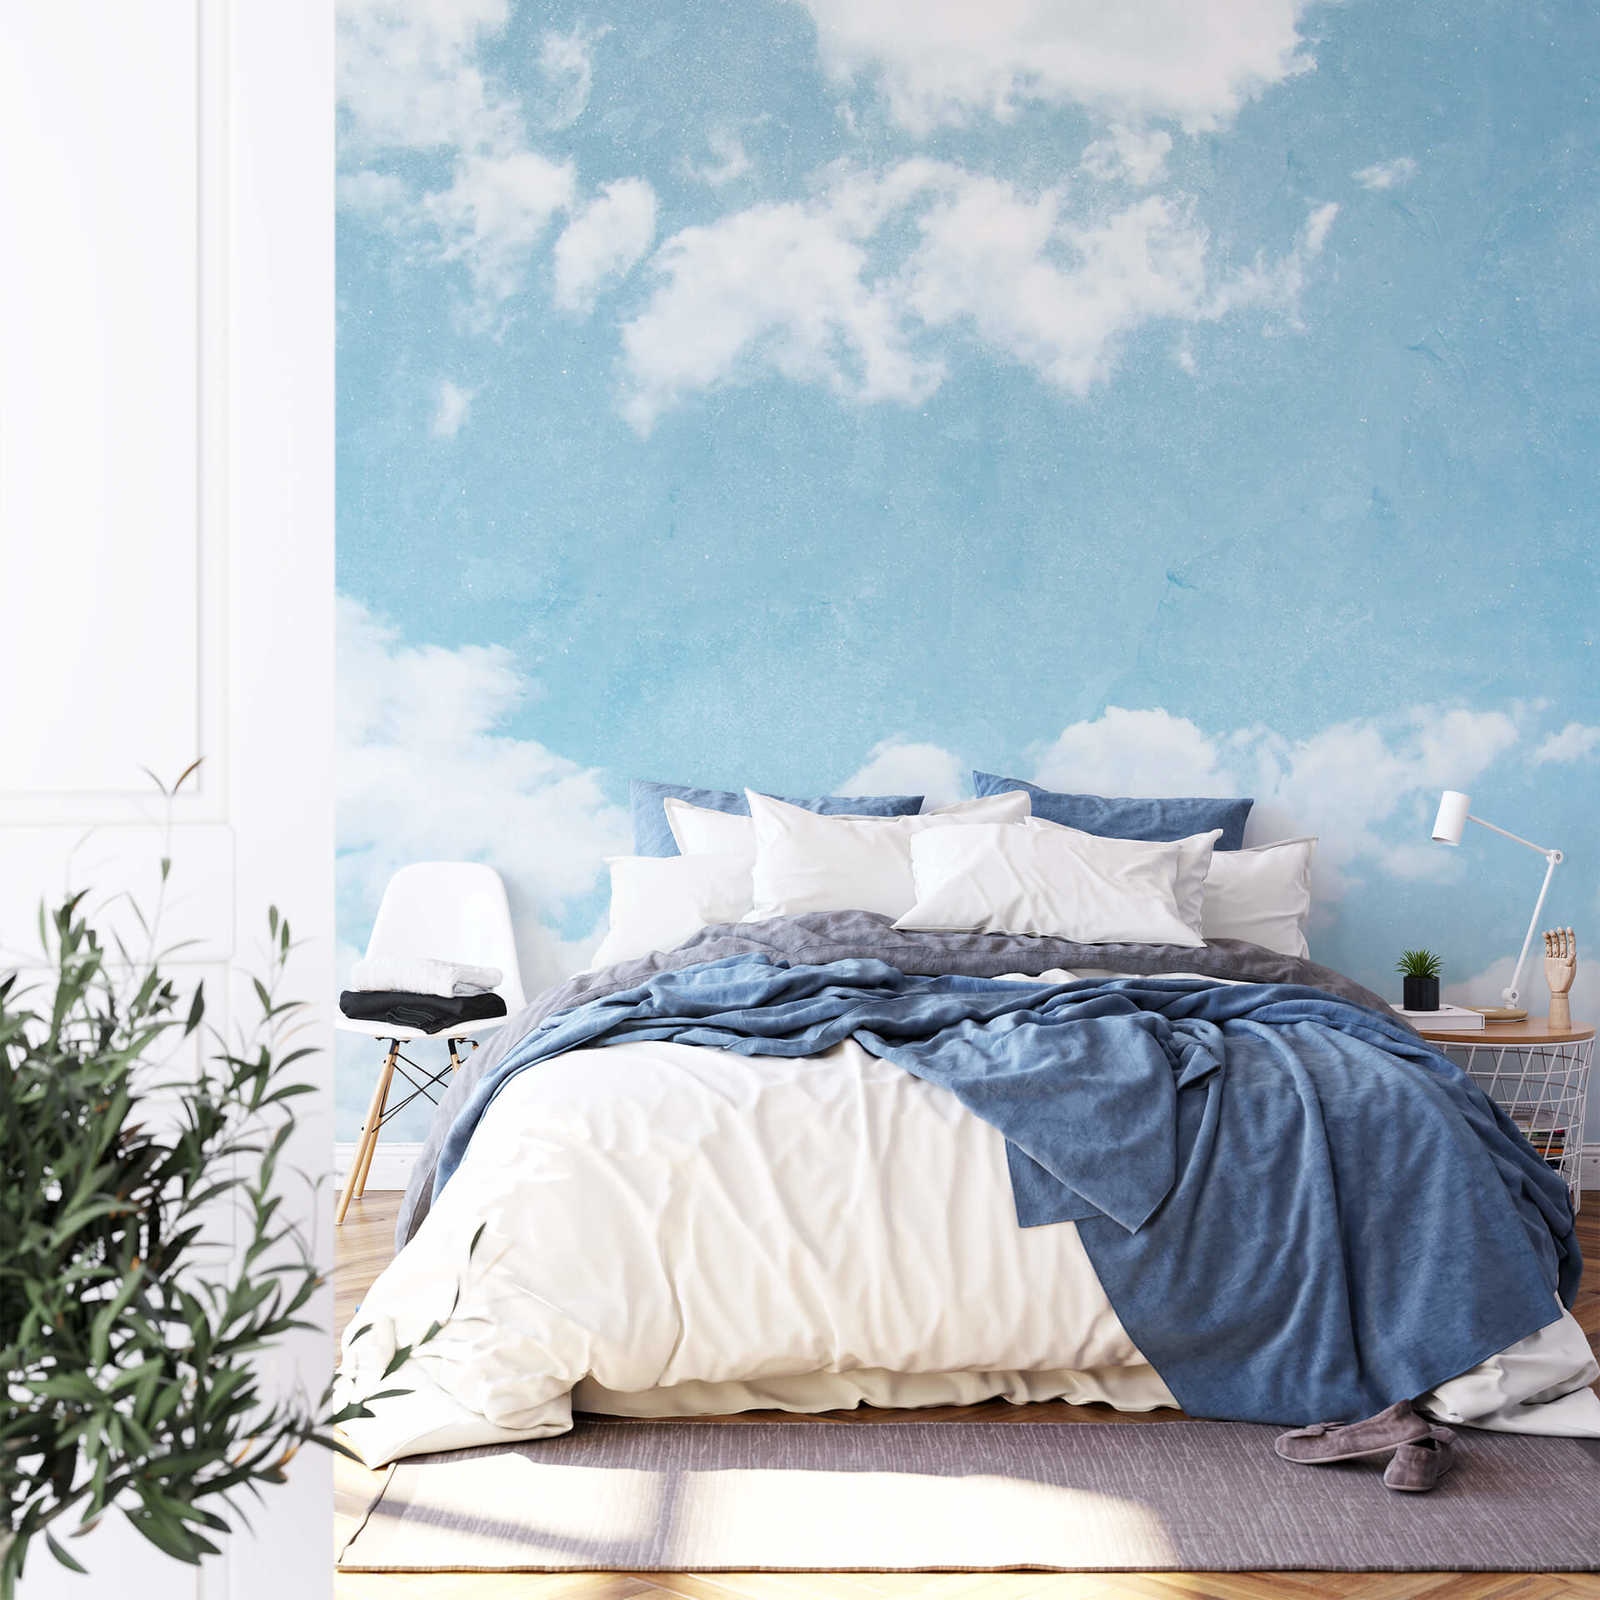             Photo wallpaper cloudy sky - blue, white
        